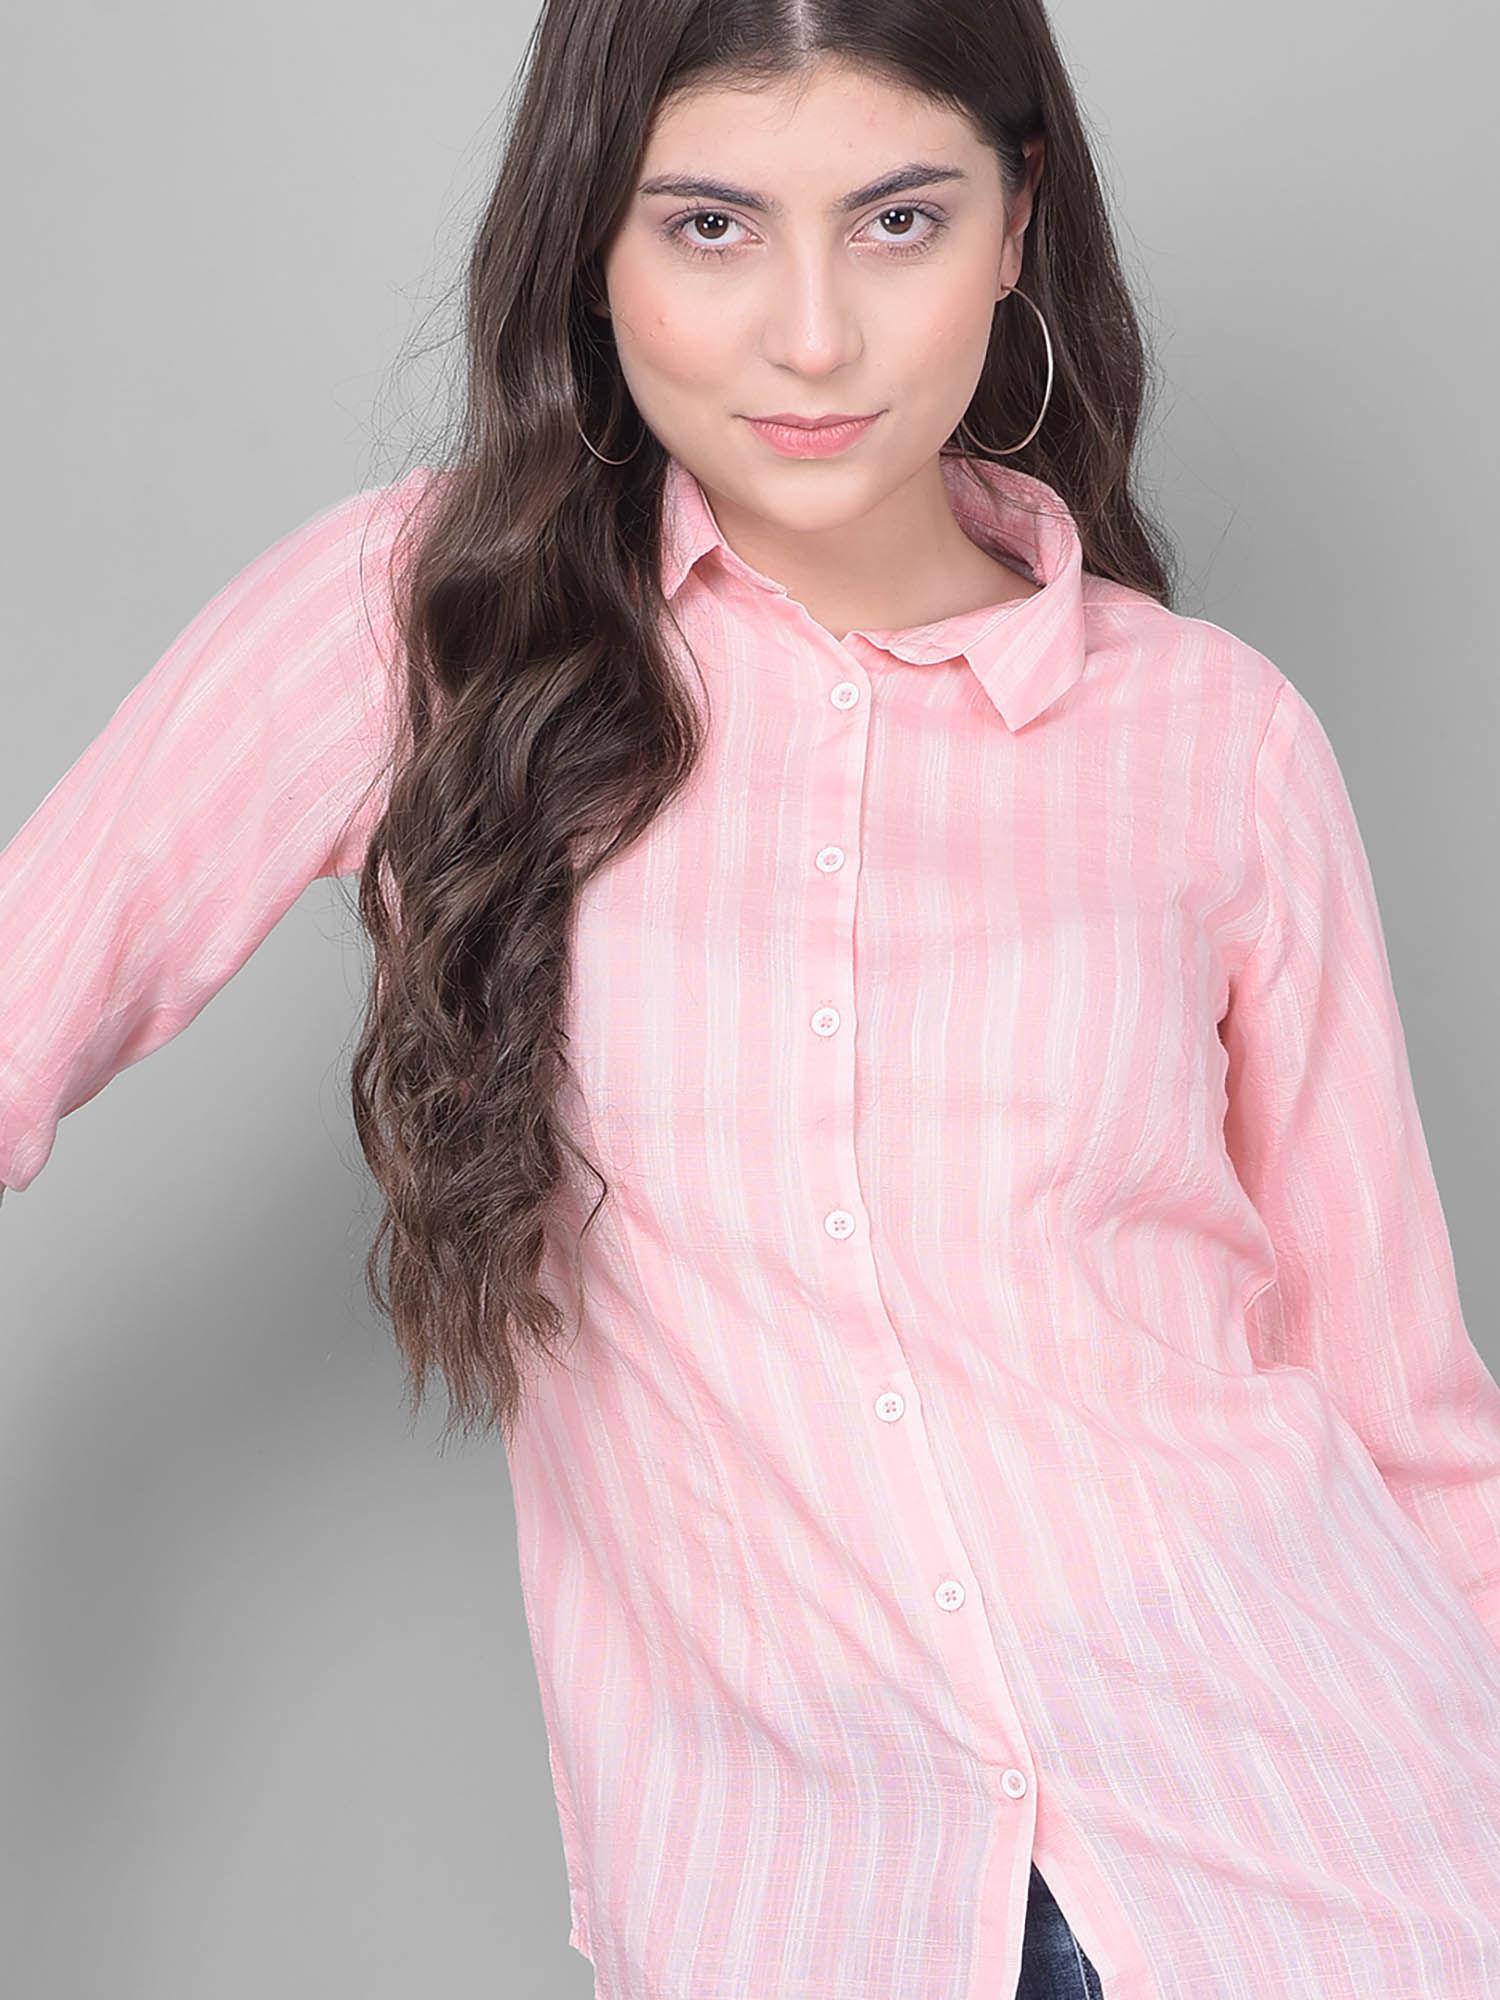 women's pink striped shirt